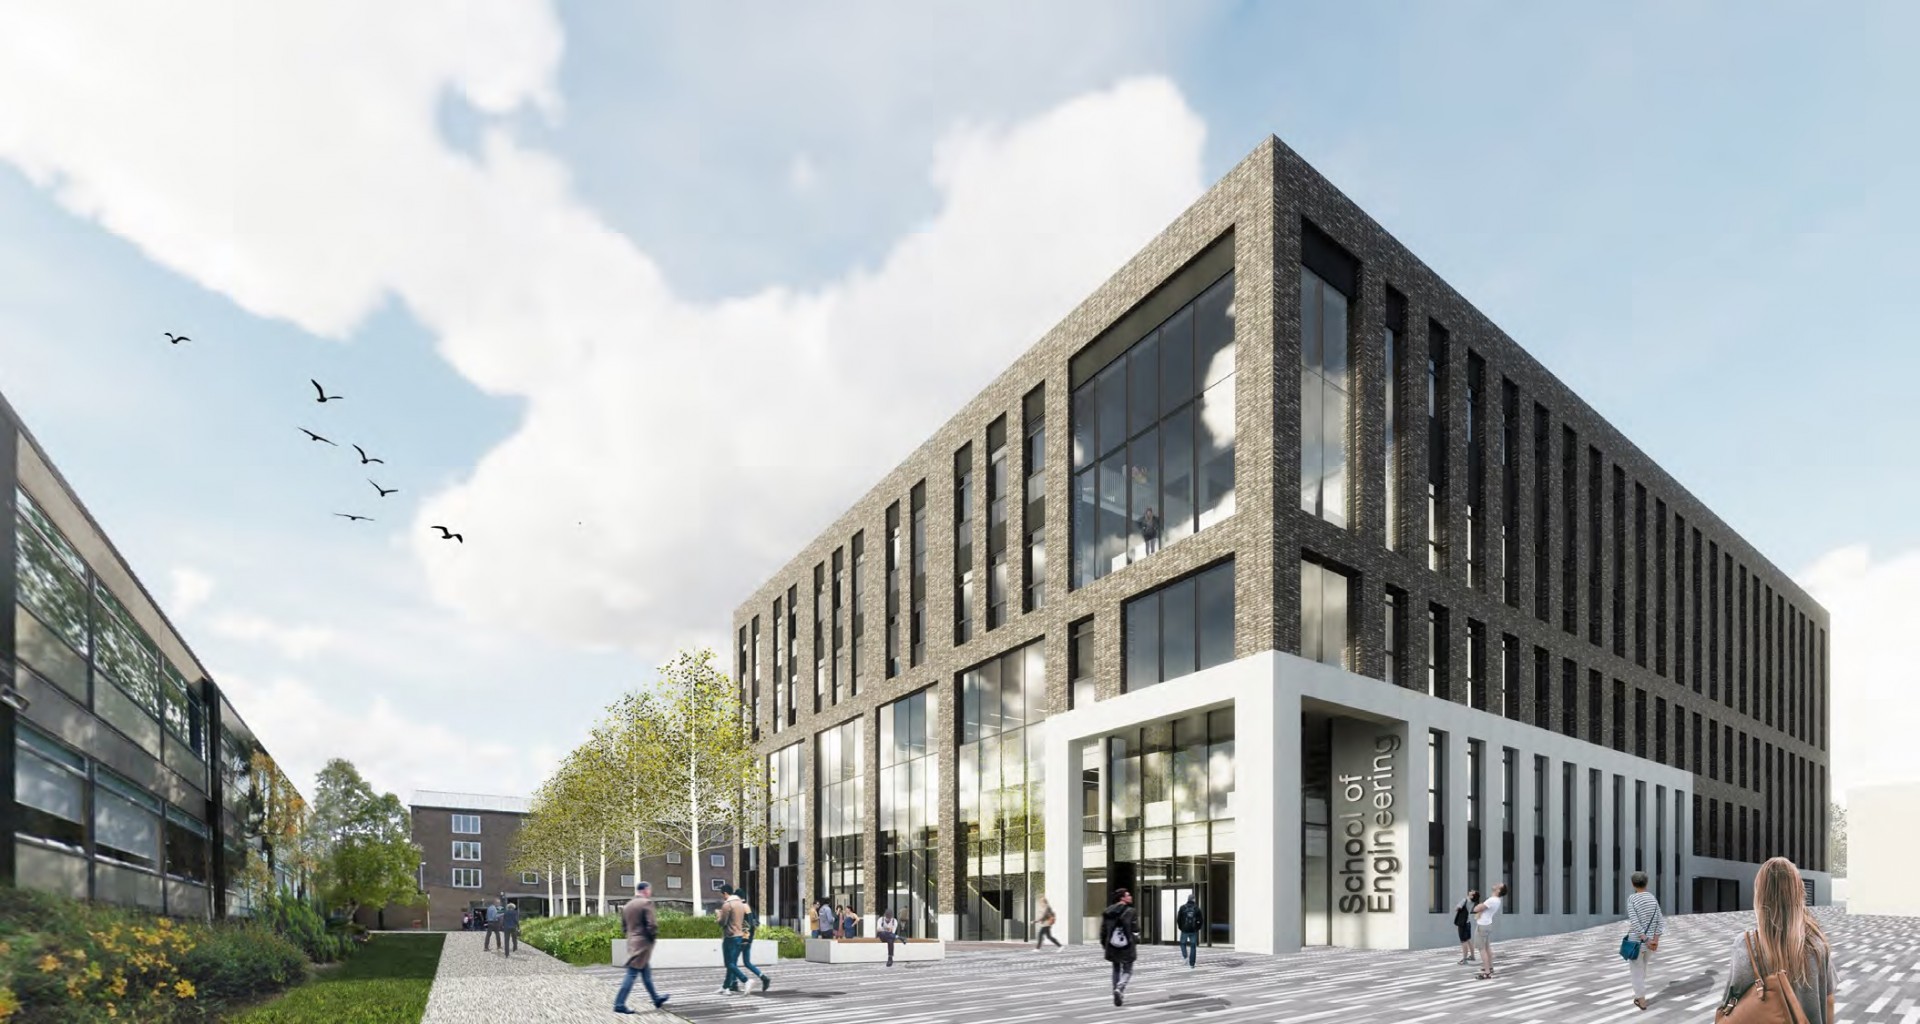 Kier to deliver £22m school of engineering for University of Edinburgh